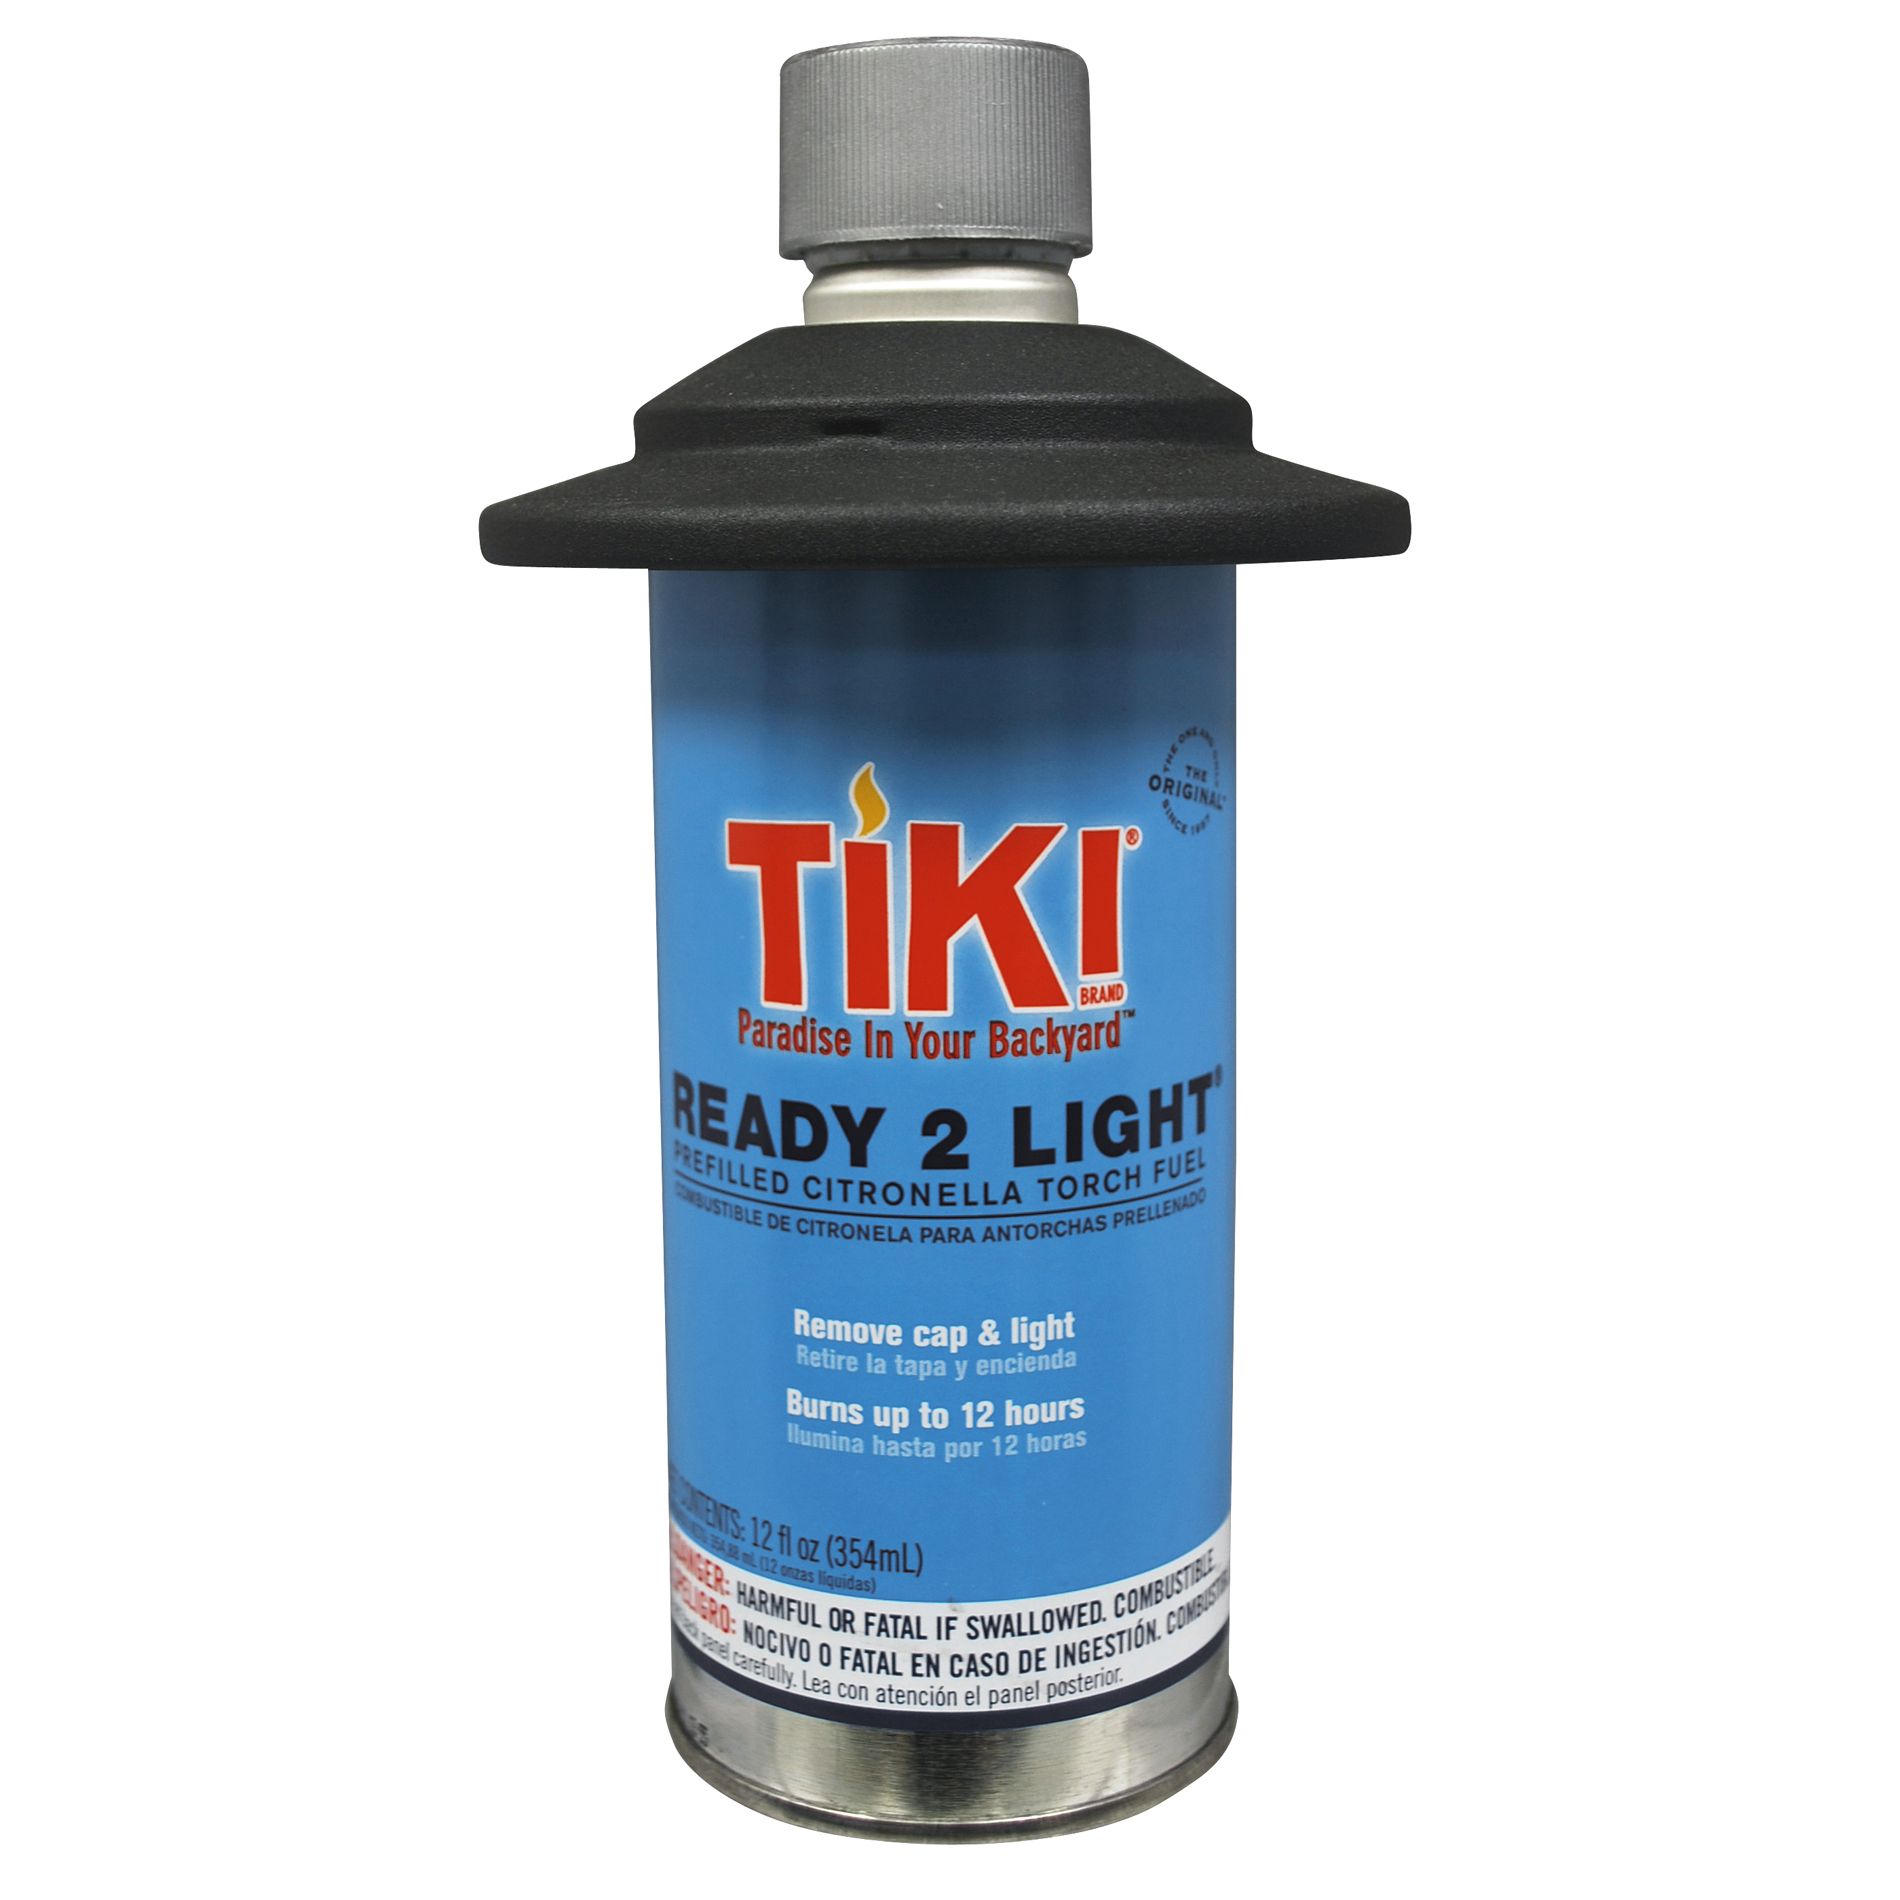 Tiki Ready 2 Light Canister